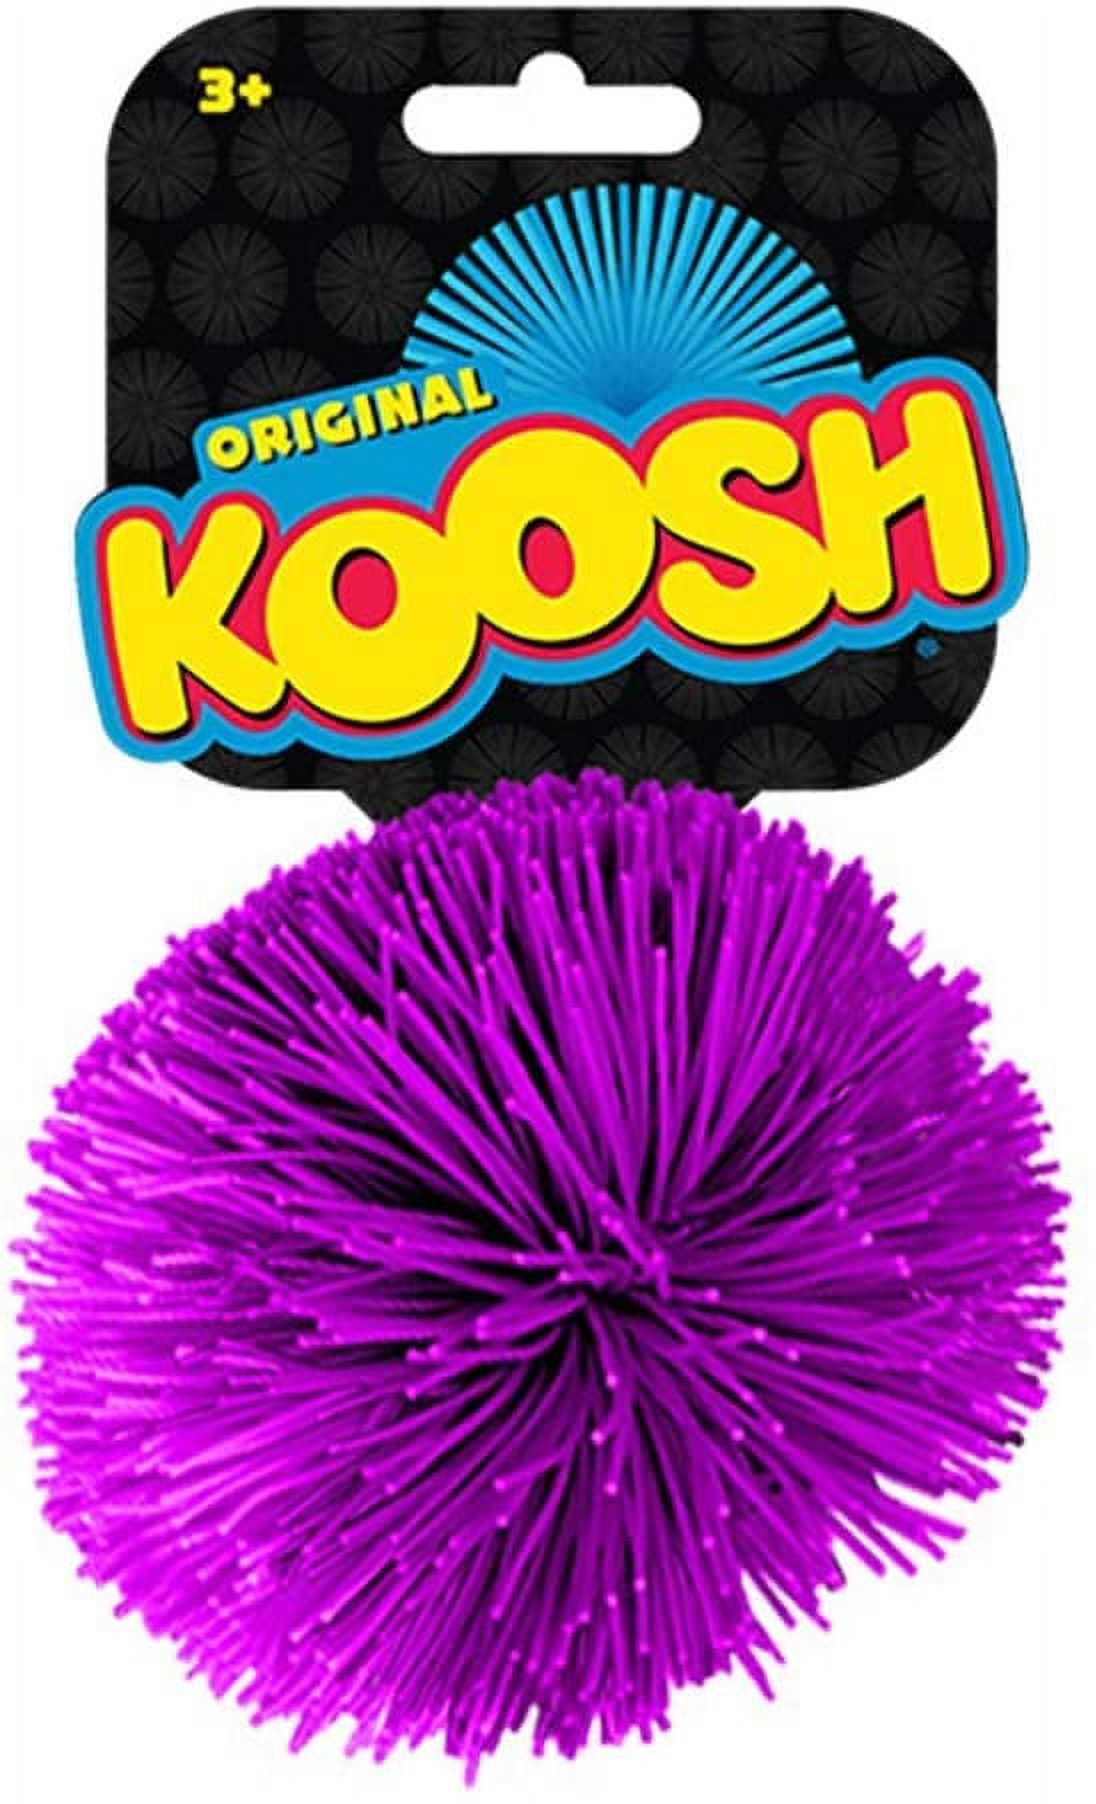 Classic Koosh Ball - image 1 of 1